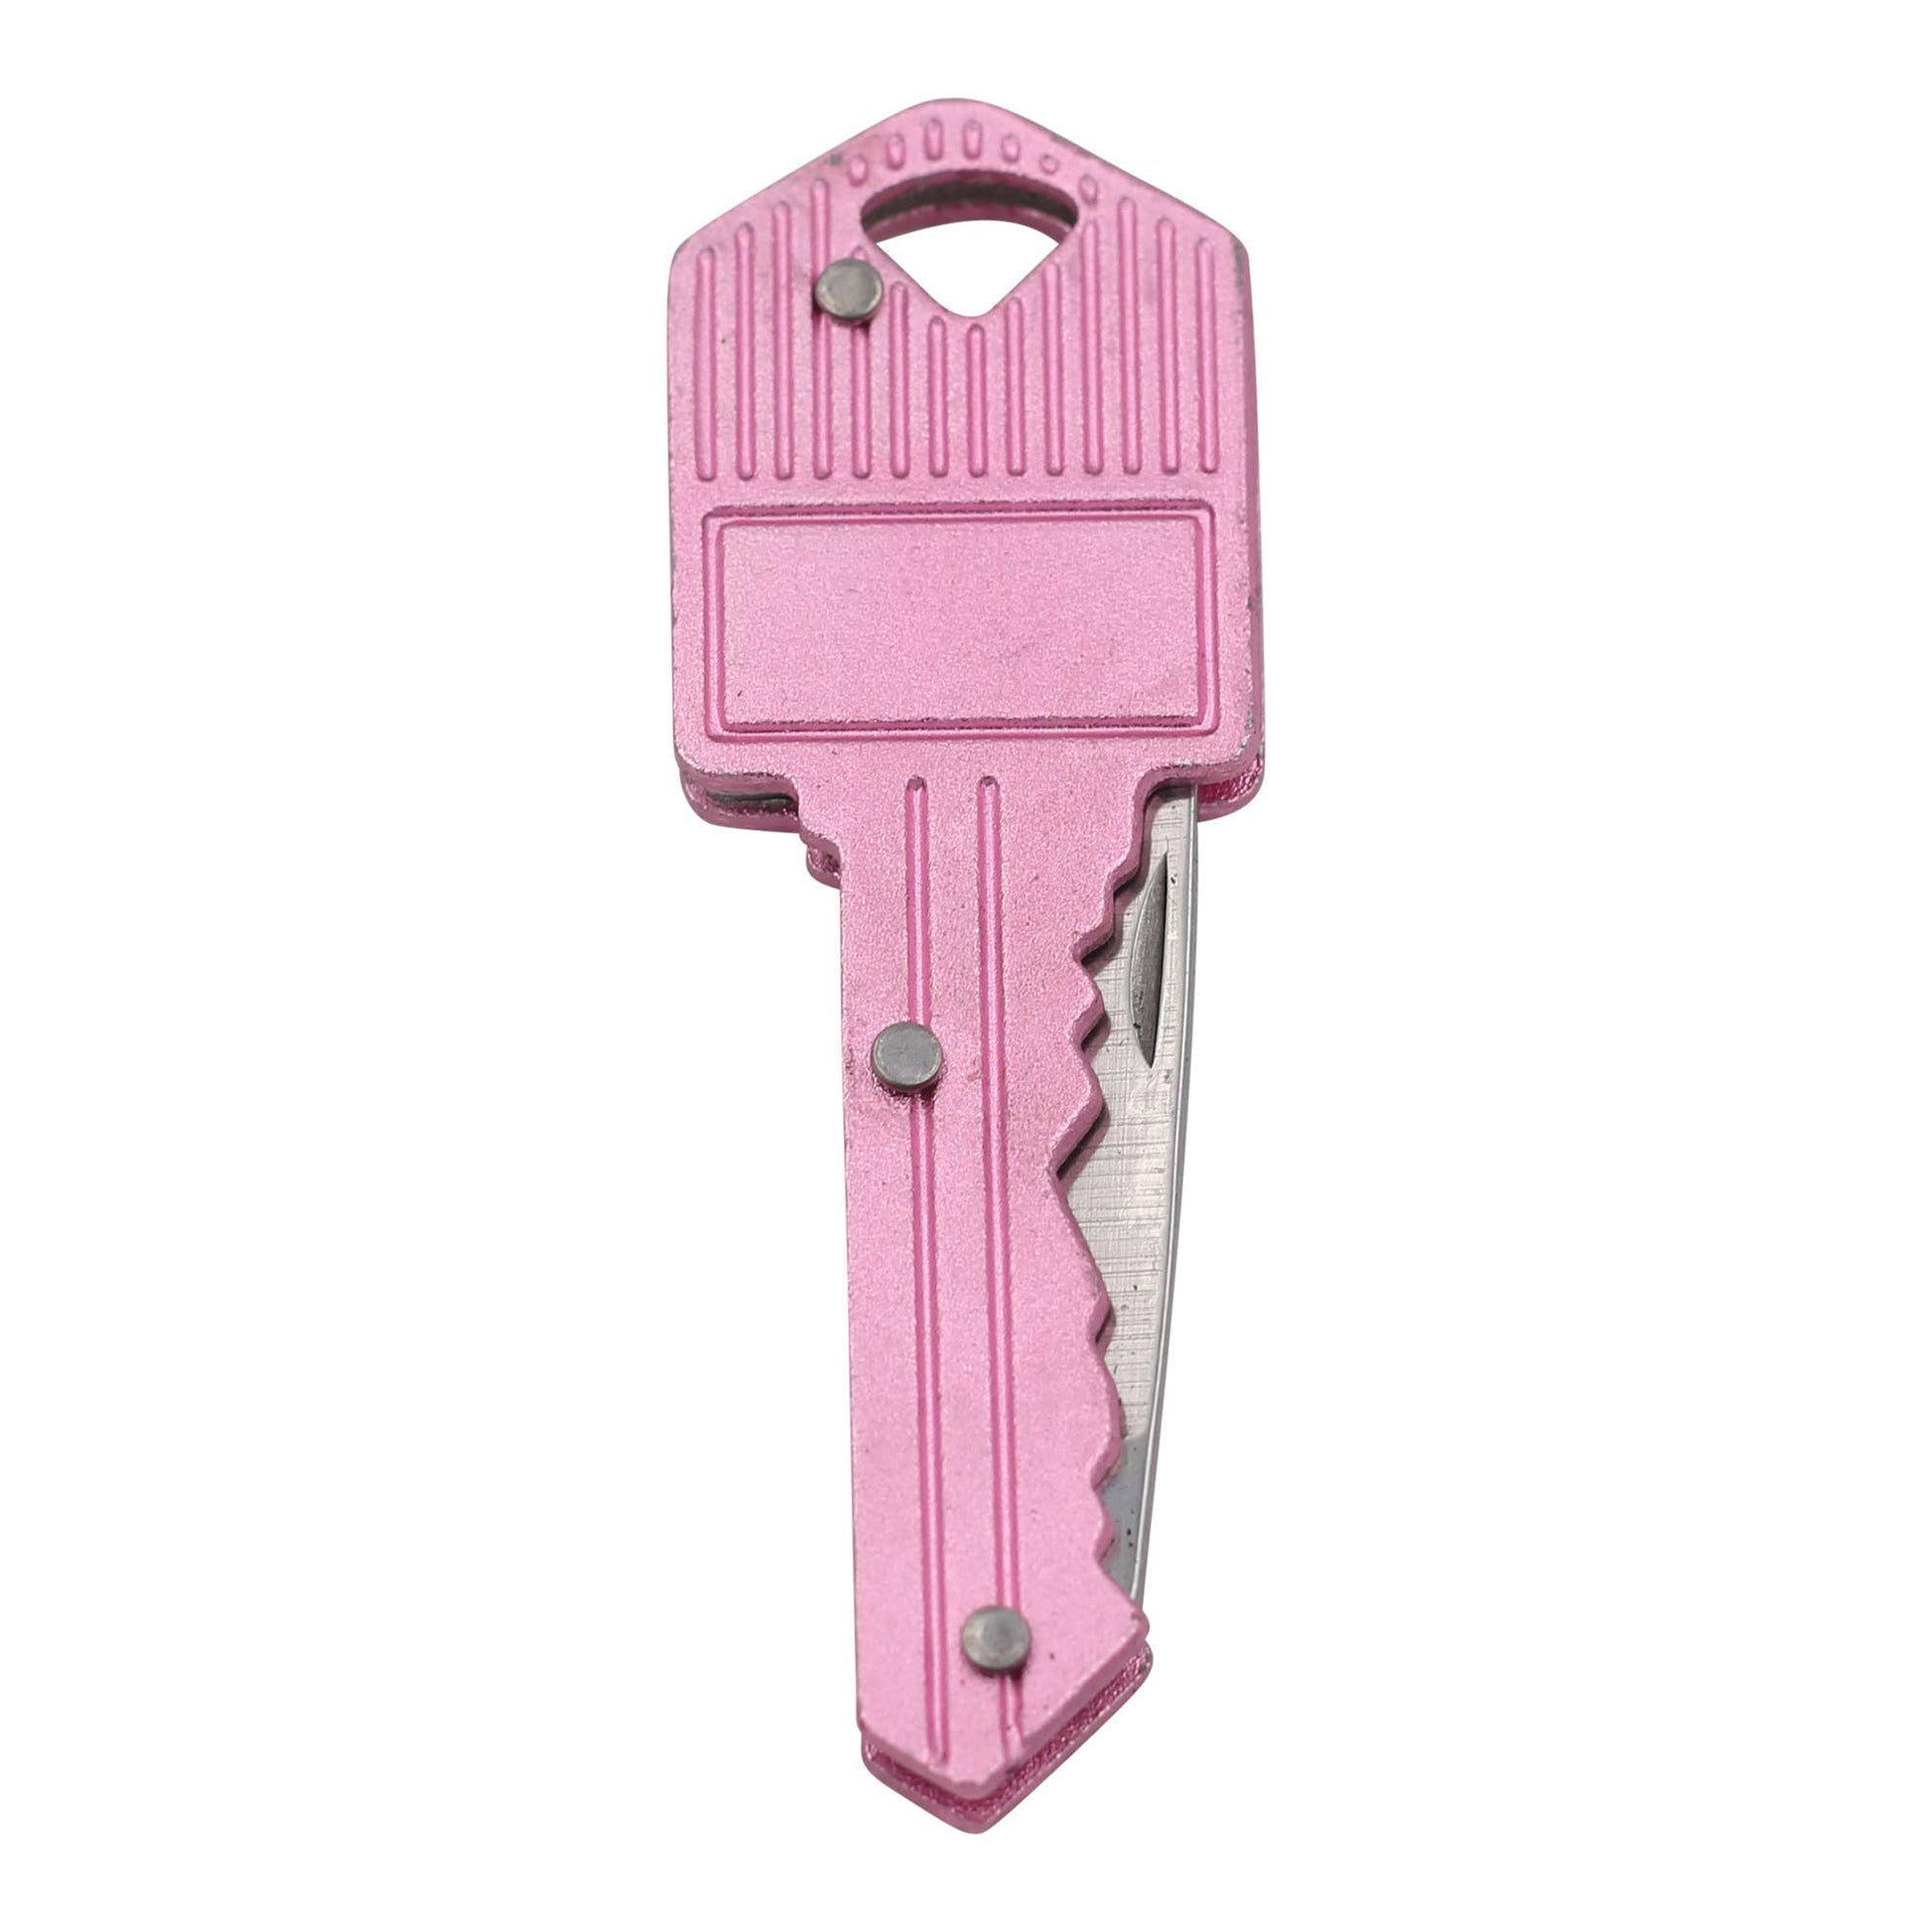 Image of Real Sic Pink Key Knife Keychain – Small Utility Pocketknife - 2'' Blade